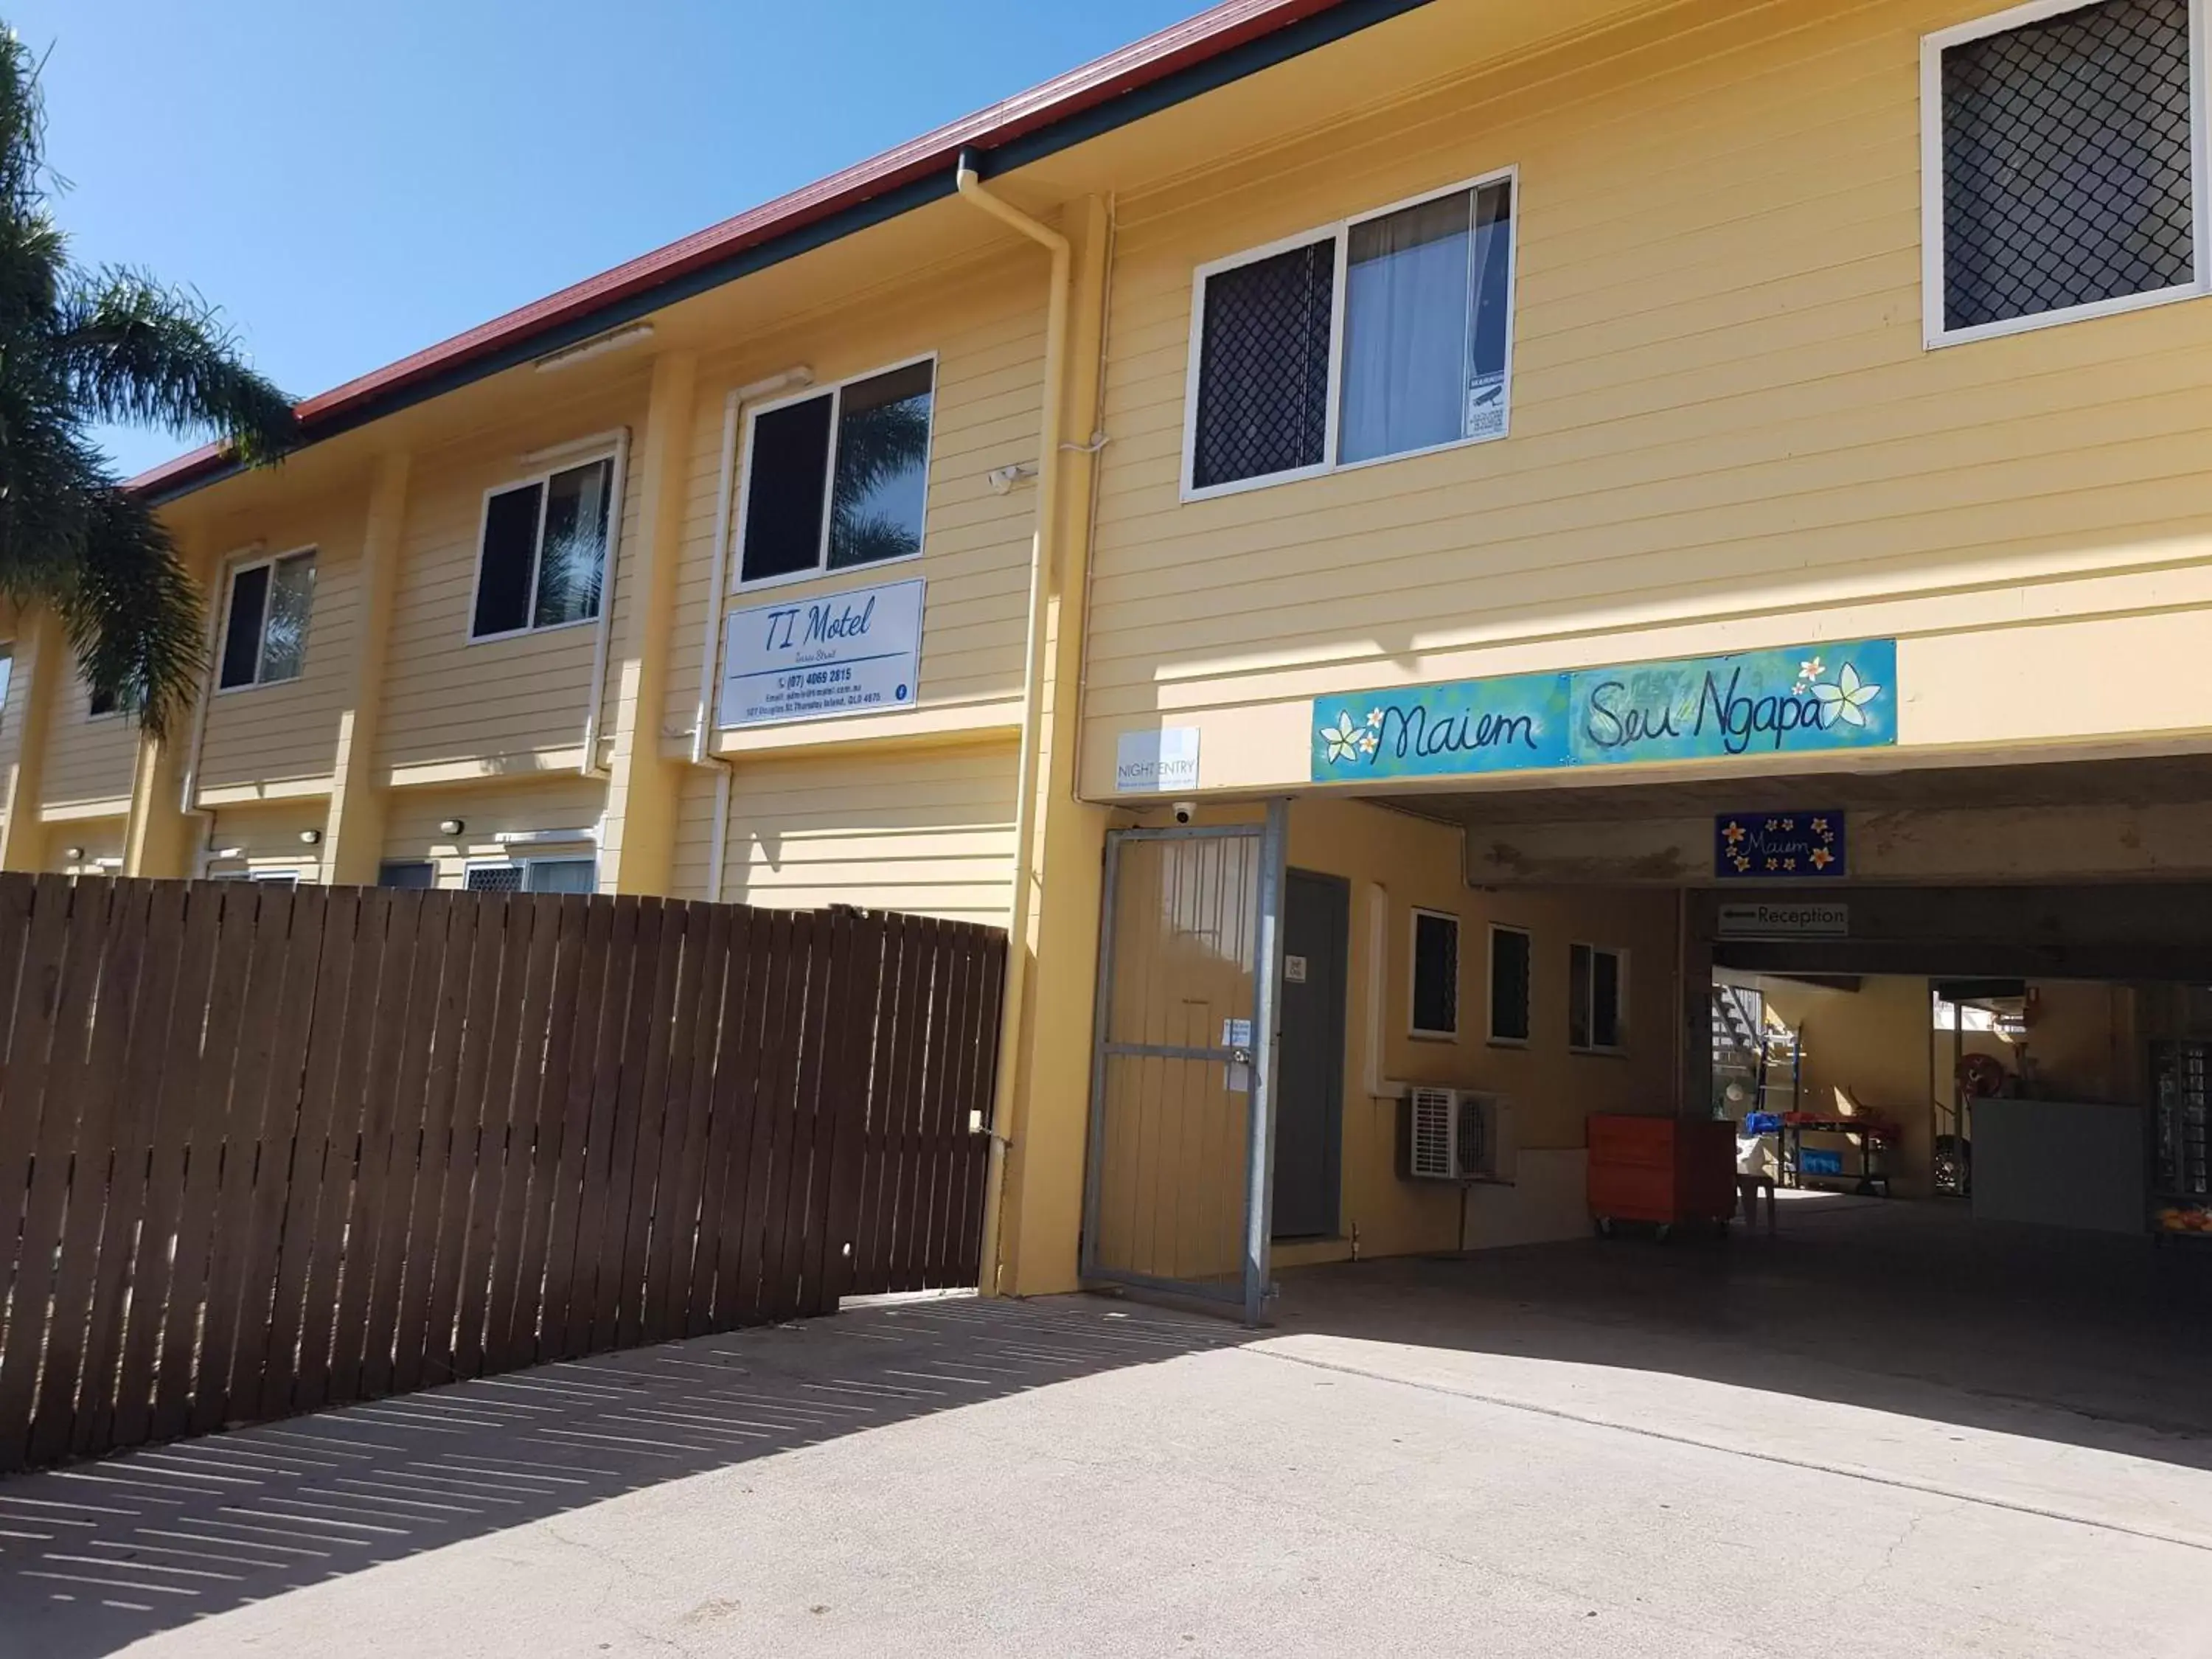 Property building in TI Motel Torres Strait